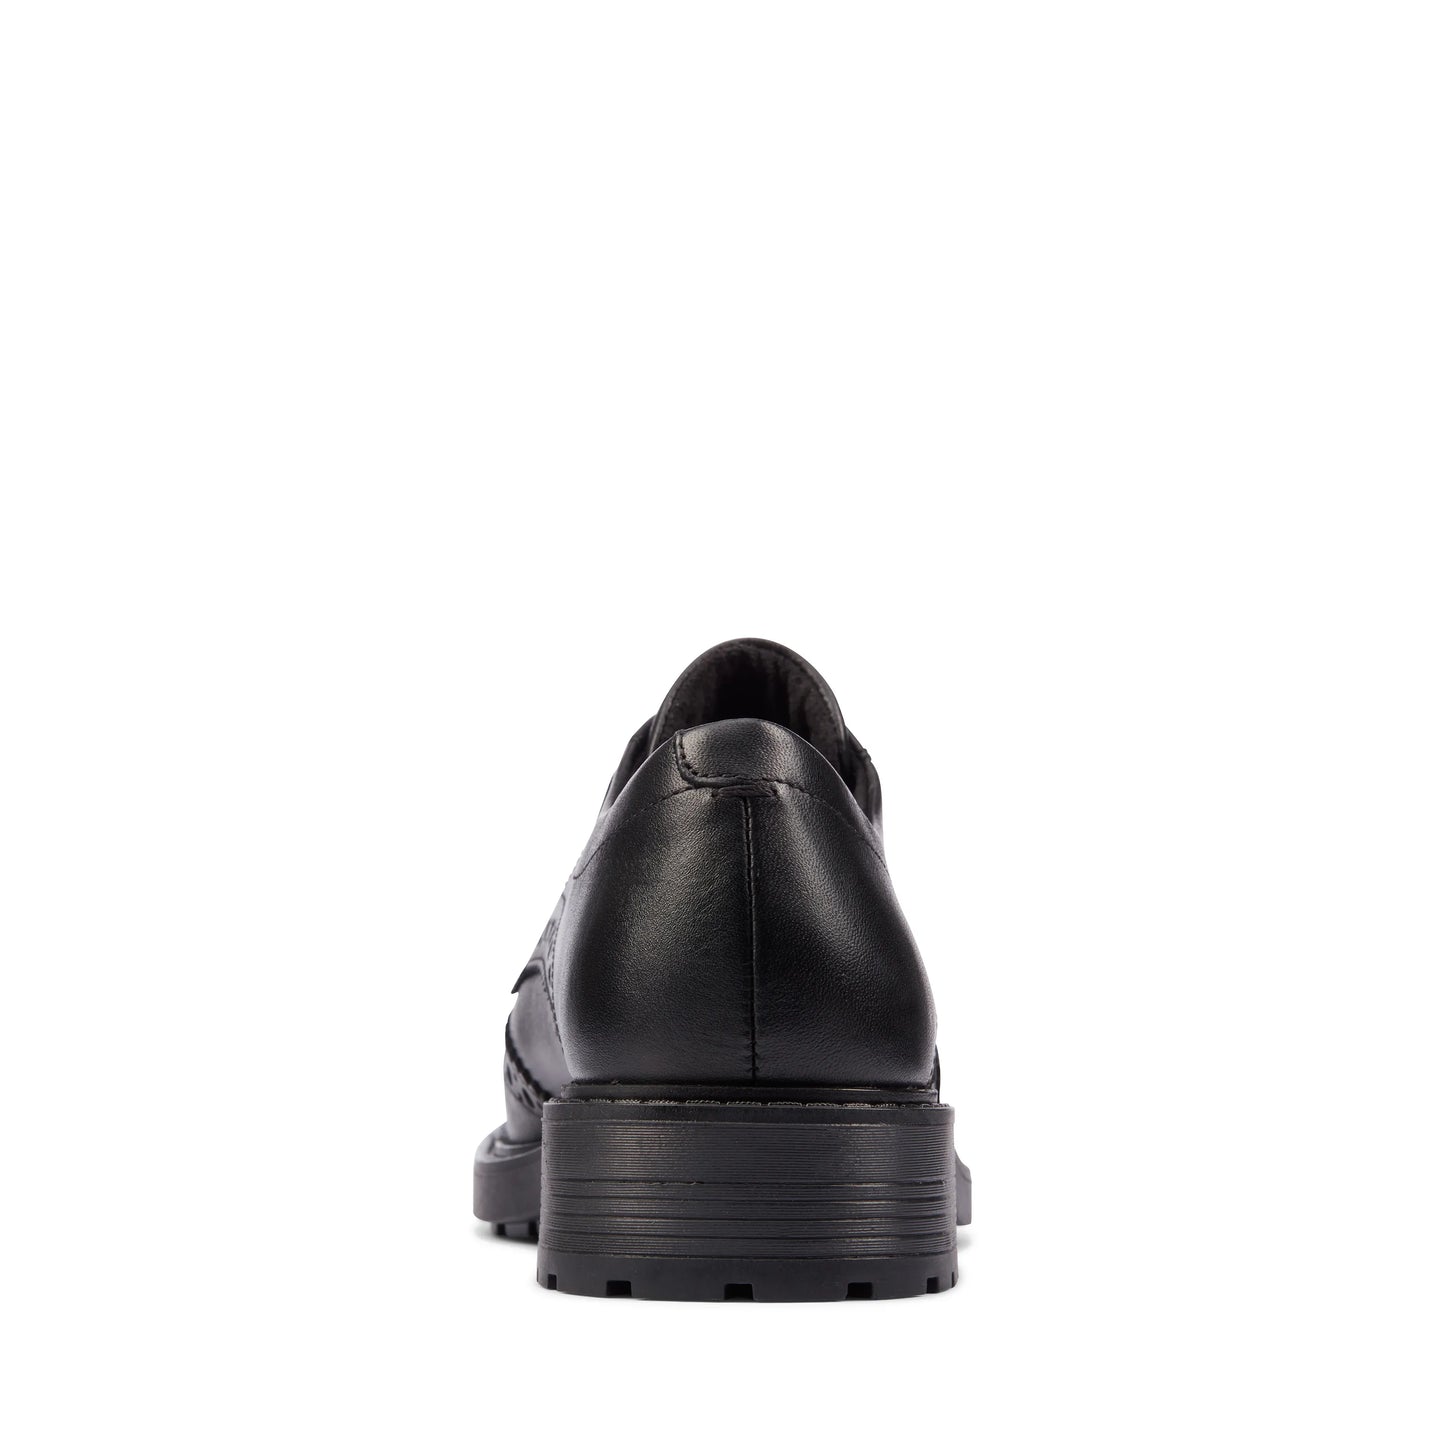 CLARKS | महिलाओं के लिए डर्बी जूते | ORINOCO2 LIMIT BLACK LEATHER | काला